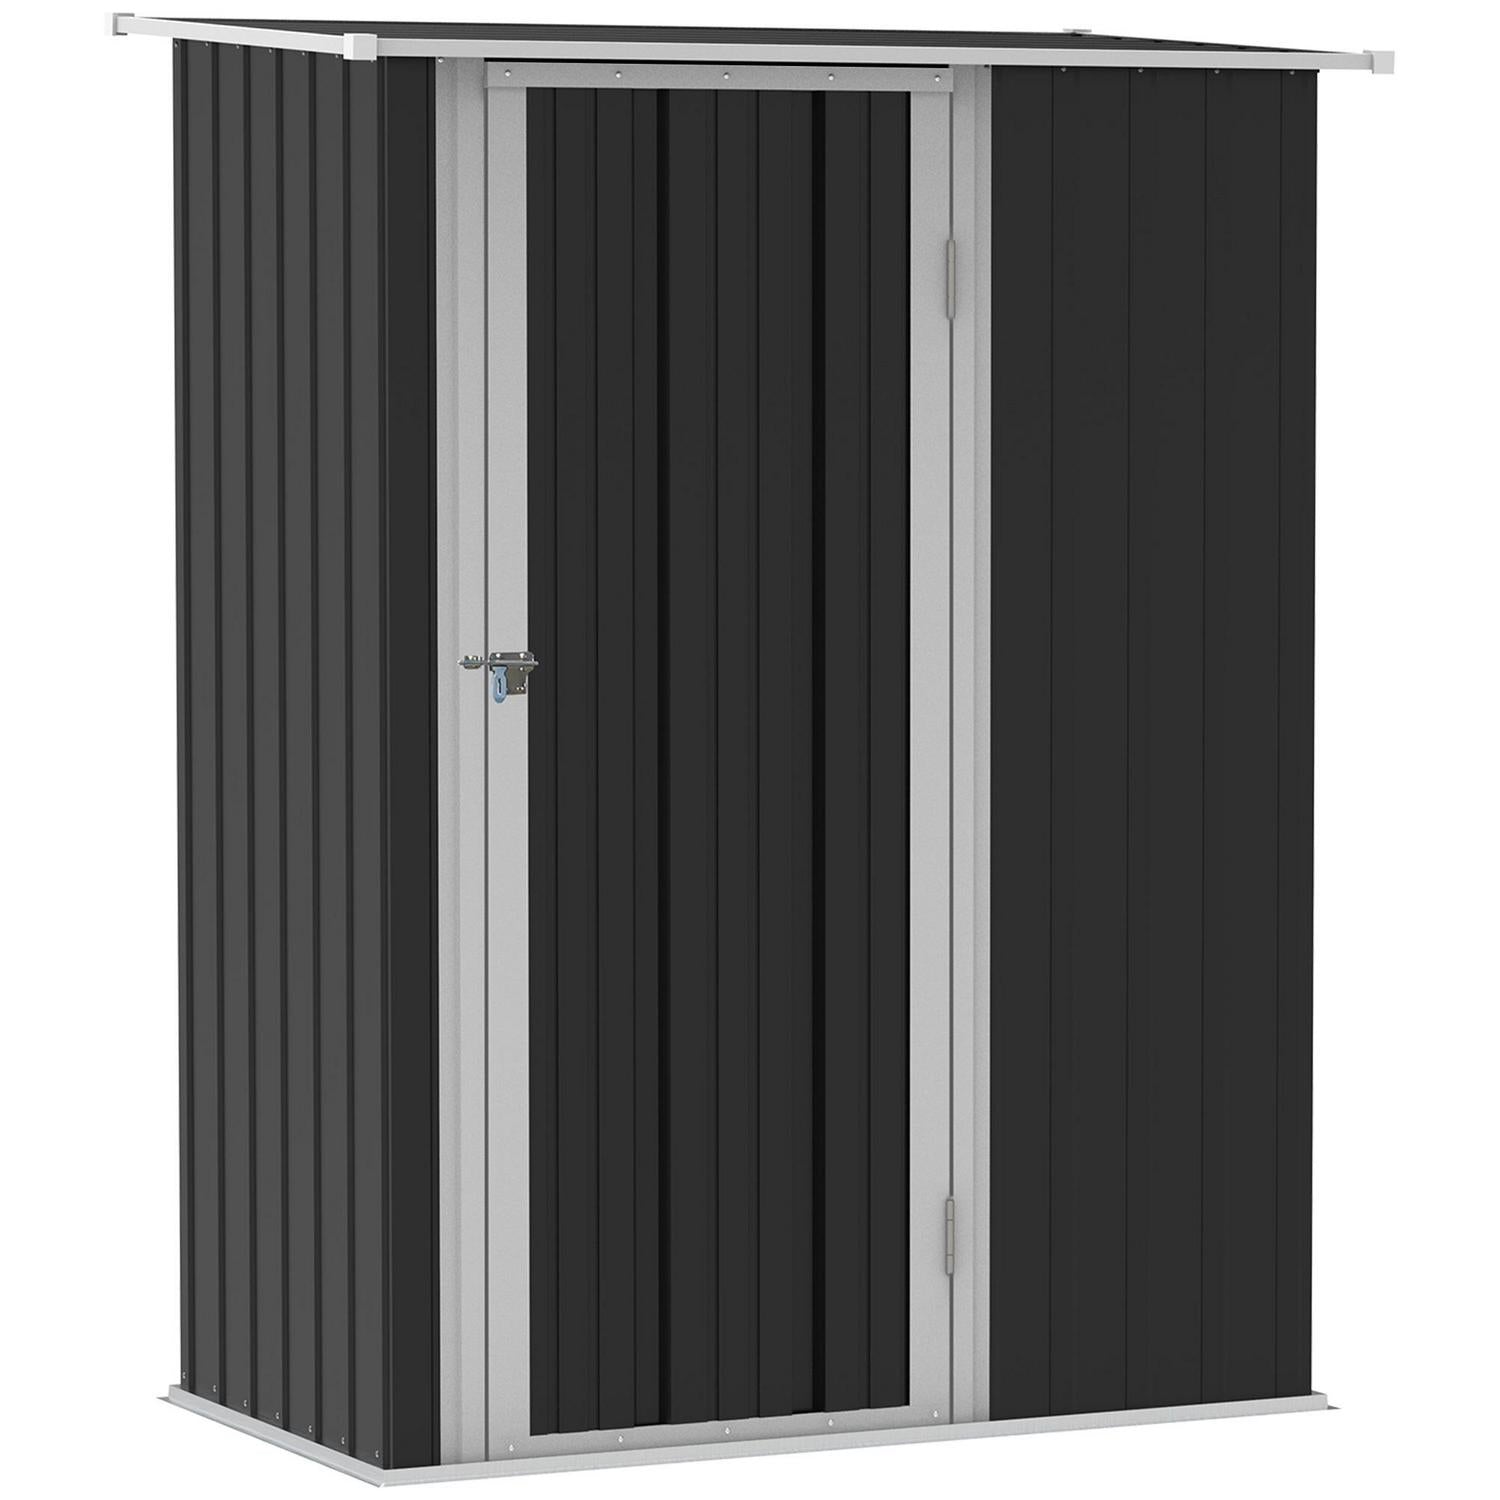 Outdoor Storage Shed Steel Garden W/ Lockable For Backyard Grey